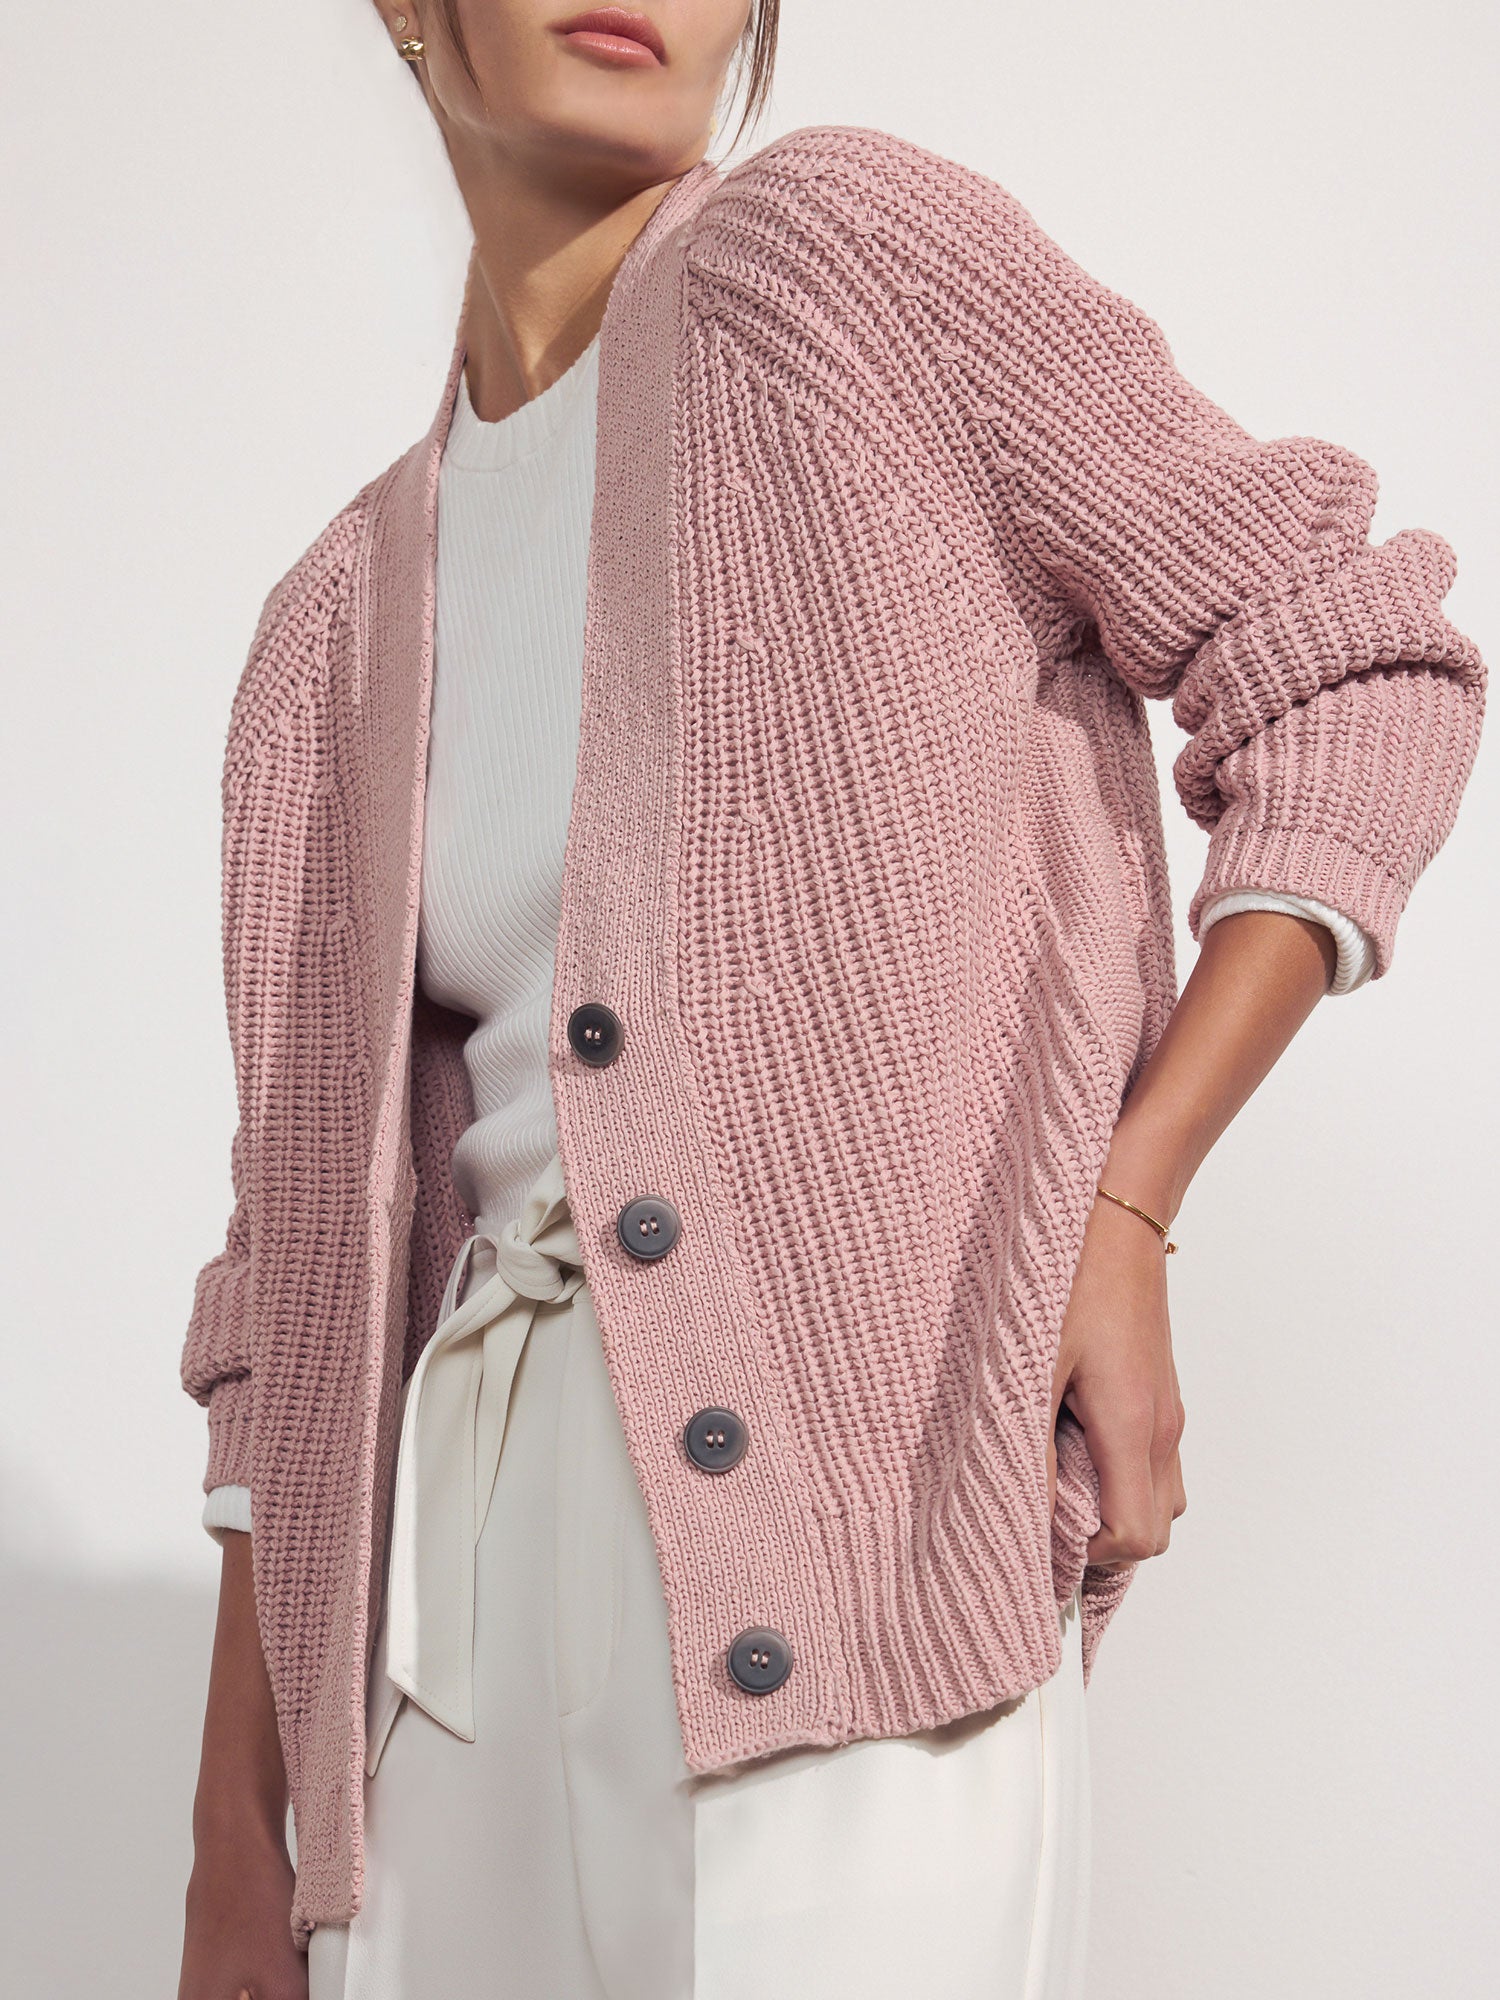 Jen linen cotton pink cardigan sweater front view